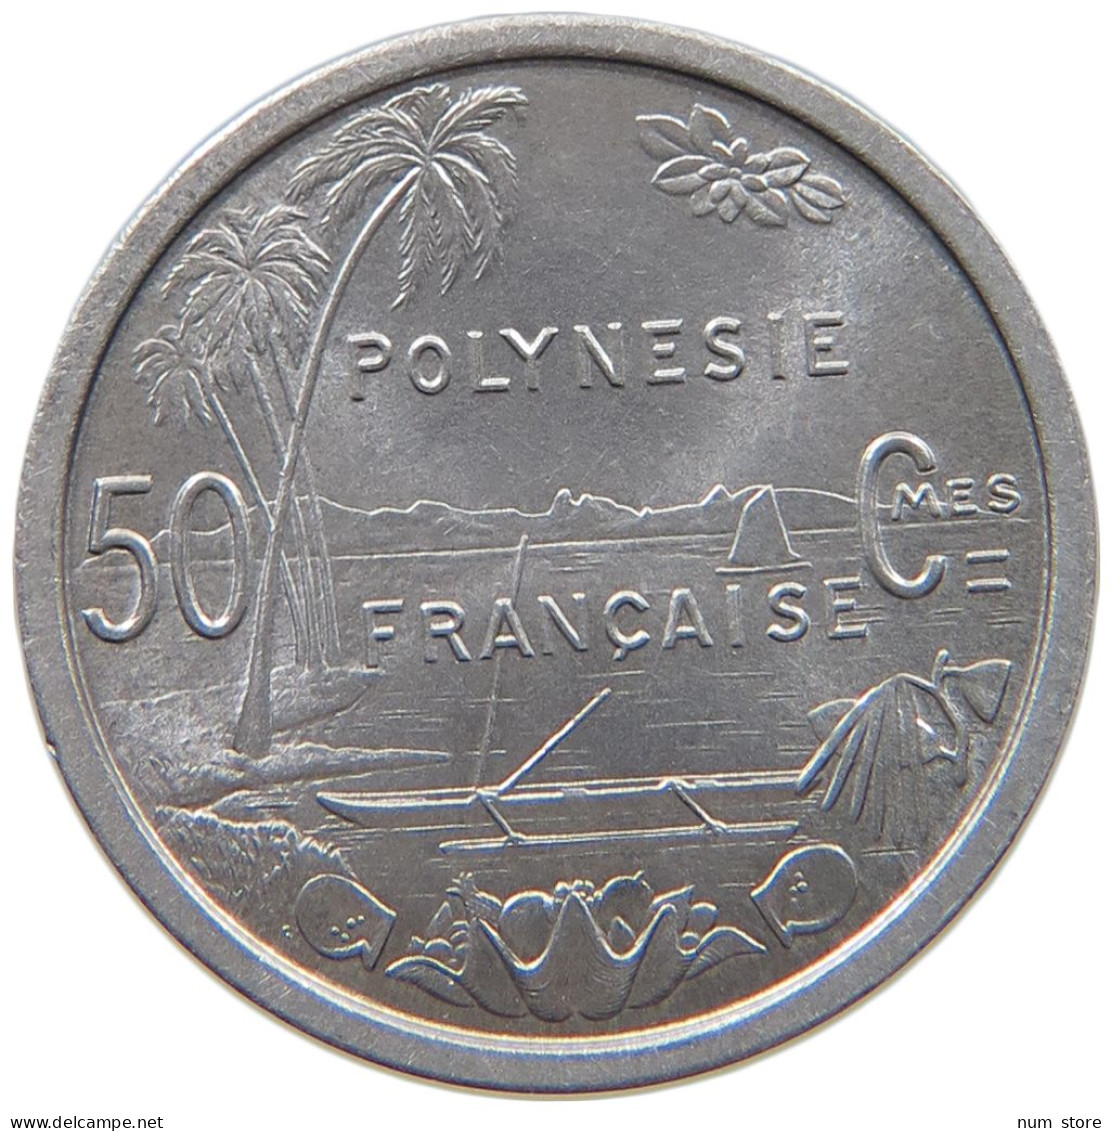 POLYNESIA 50 CENTIMES 1965  #c040 0749 - Polynésie Française